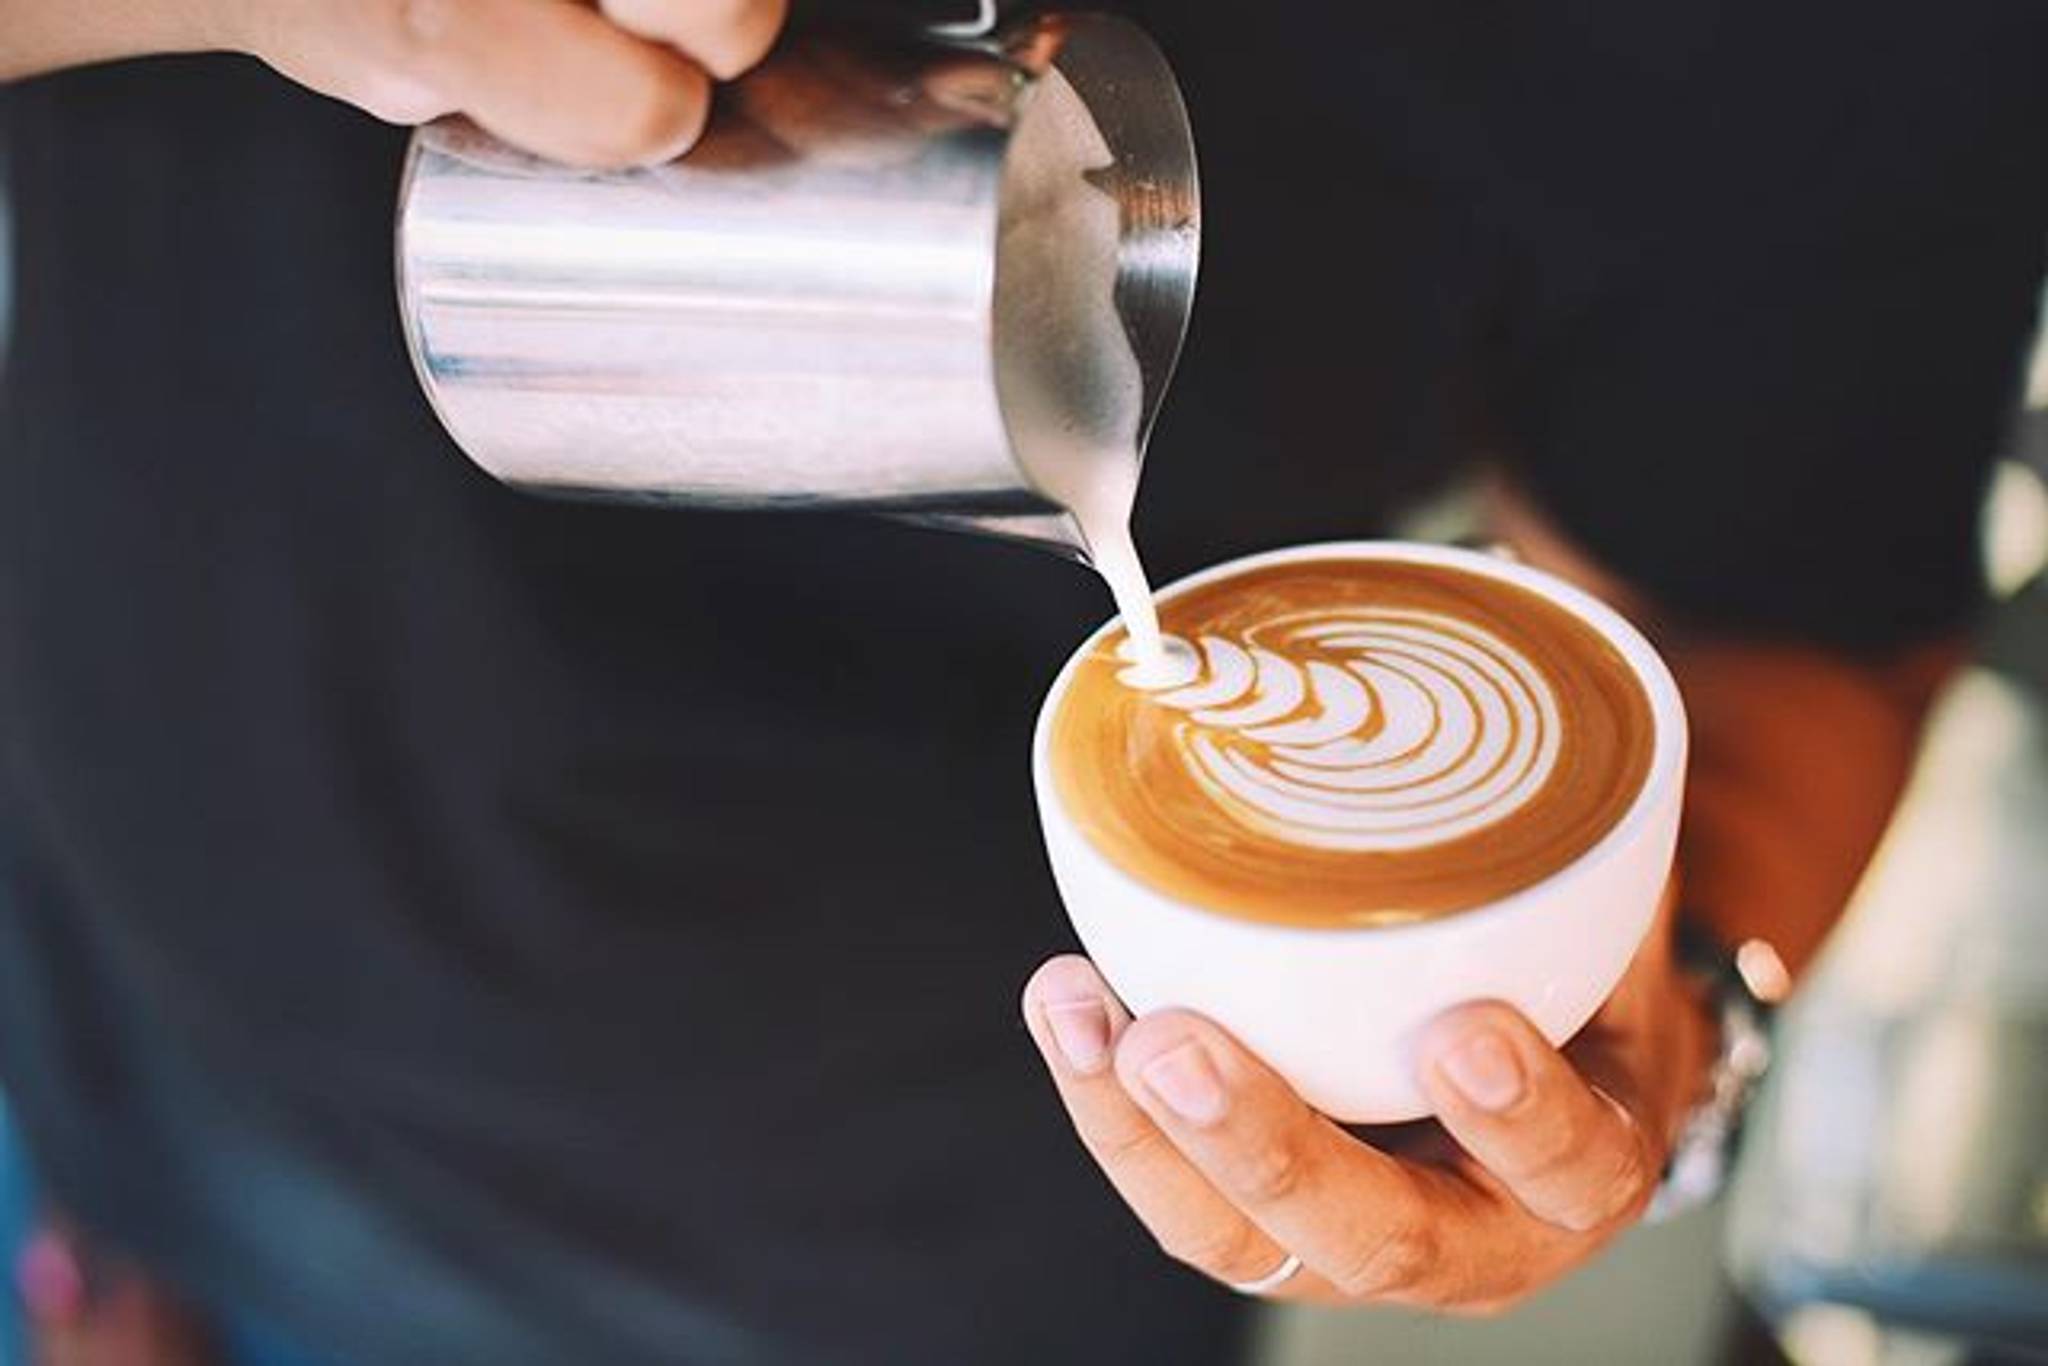 Change Coffee offers a caffeine kick for social good